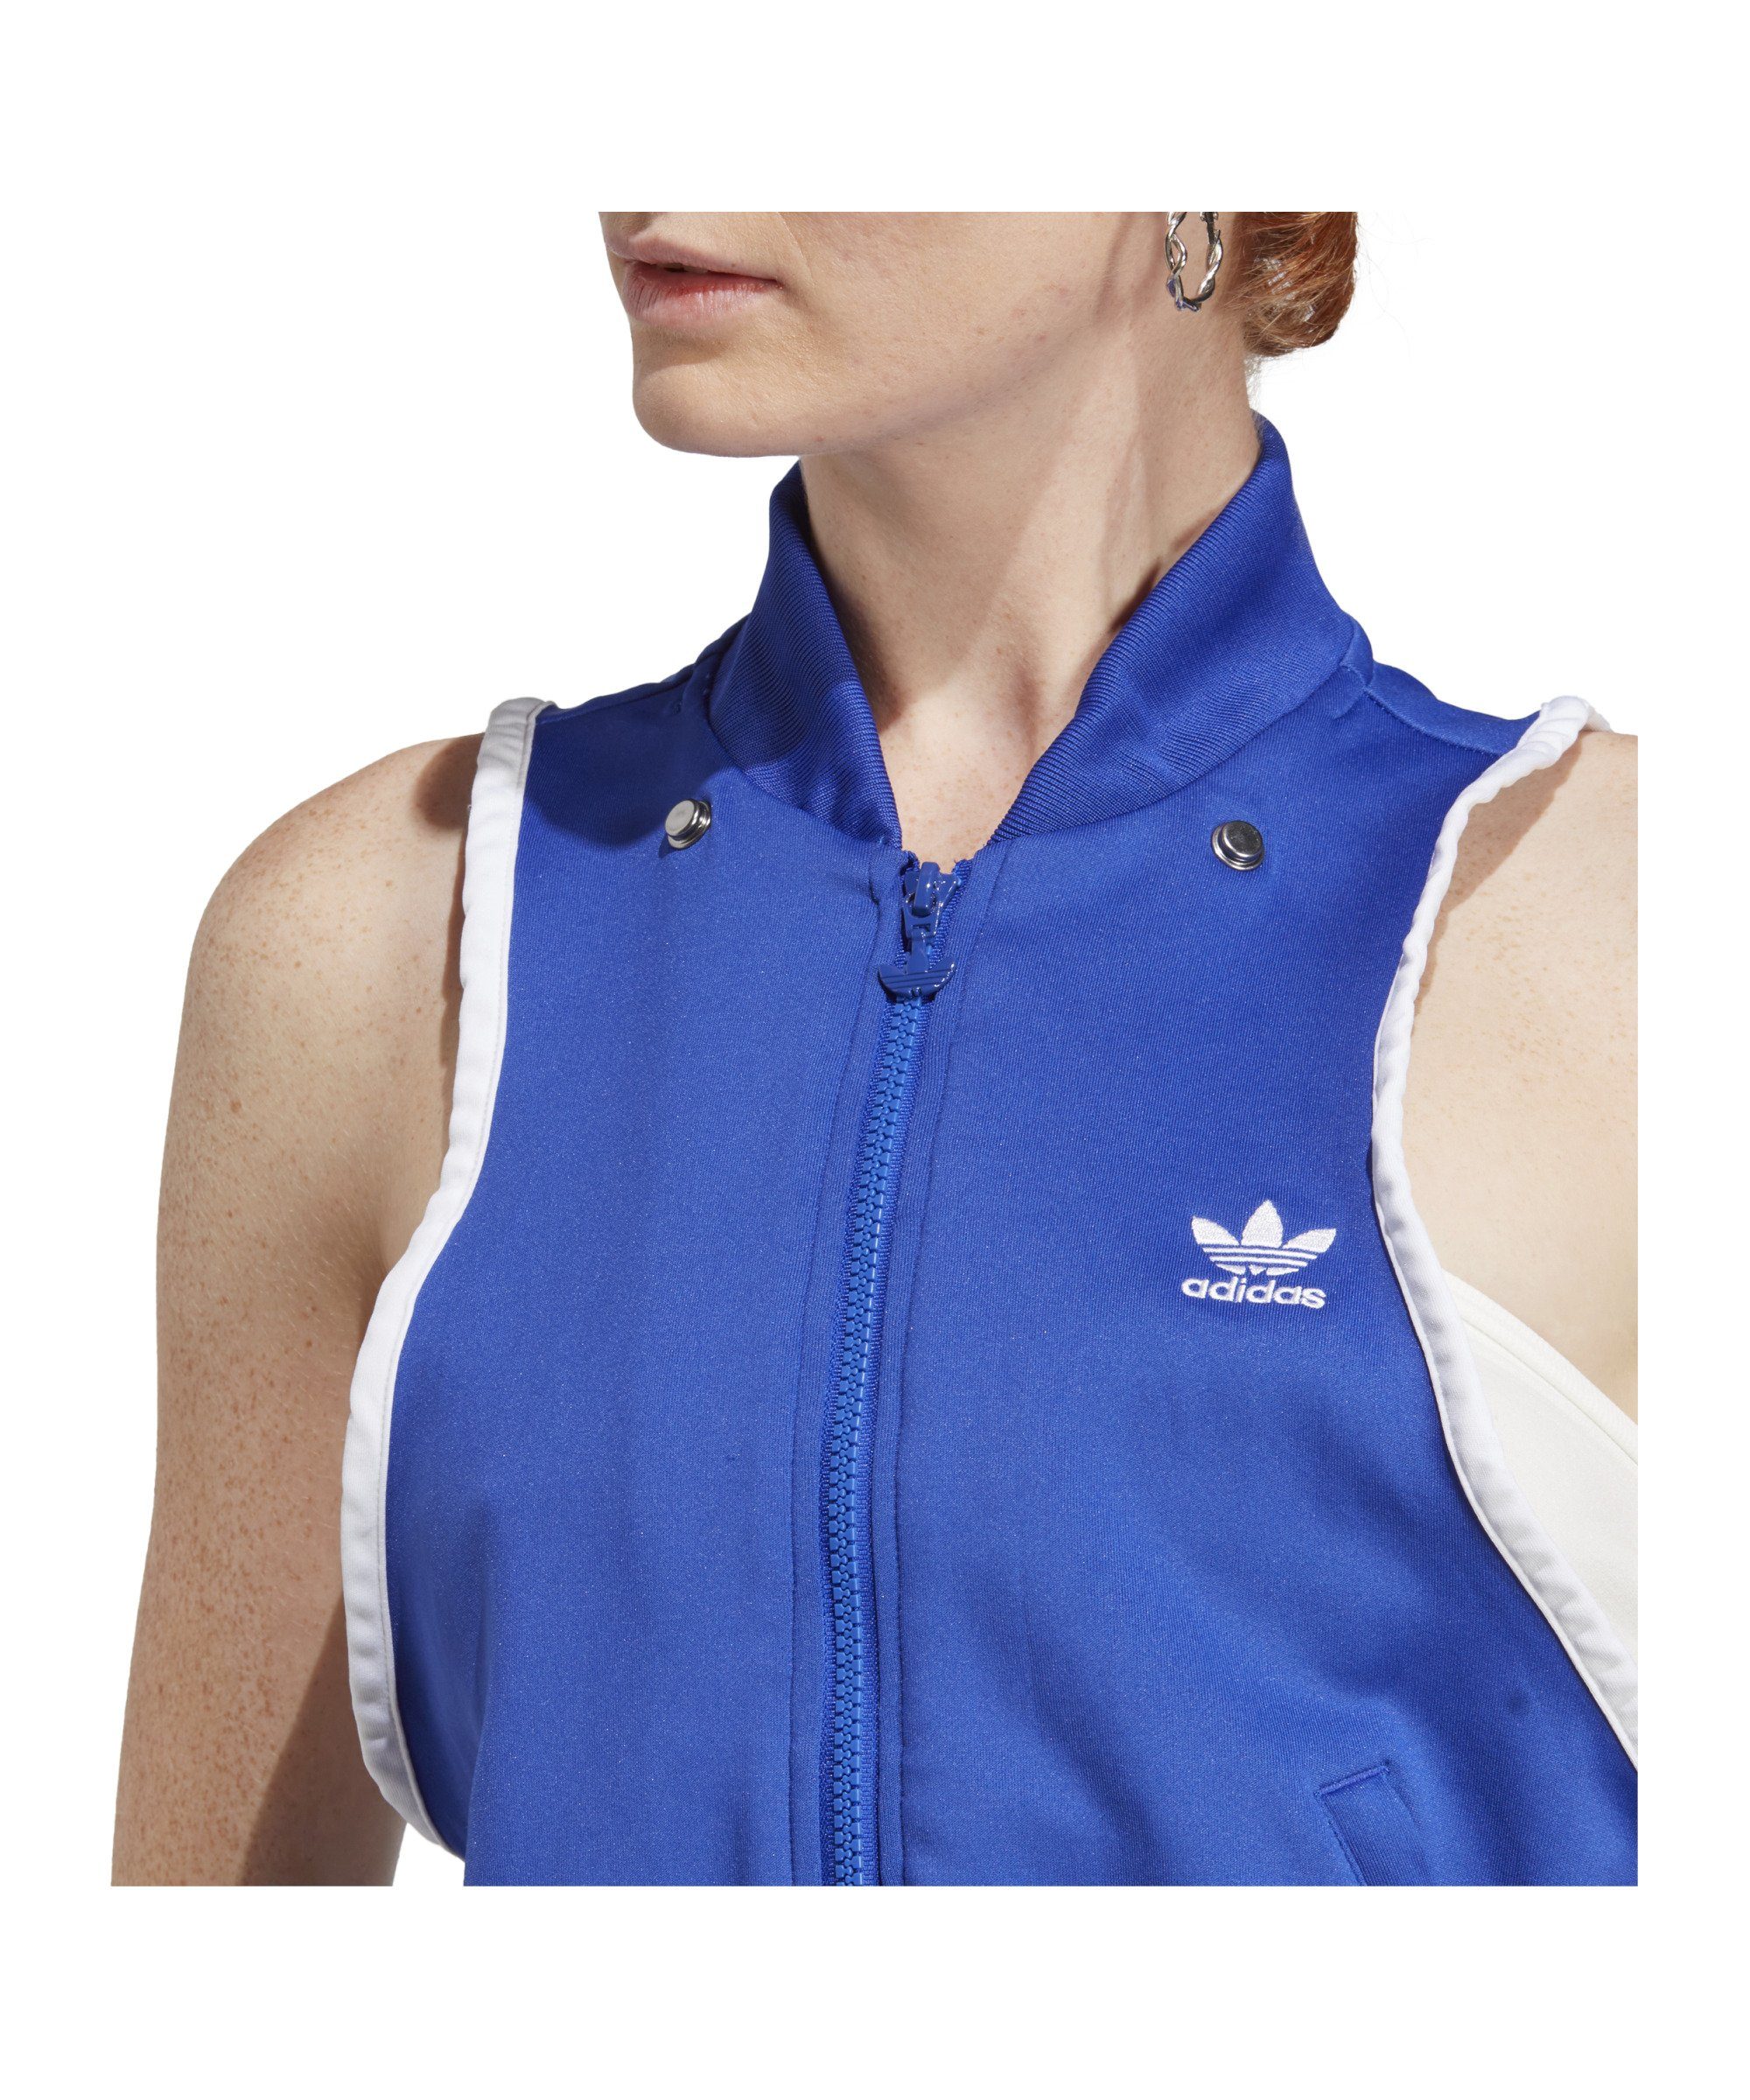 adidas Tracktop Jacke adidas Originals Damen Trainingsjacke Performance blau